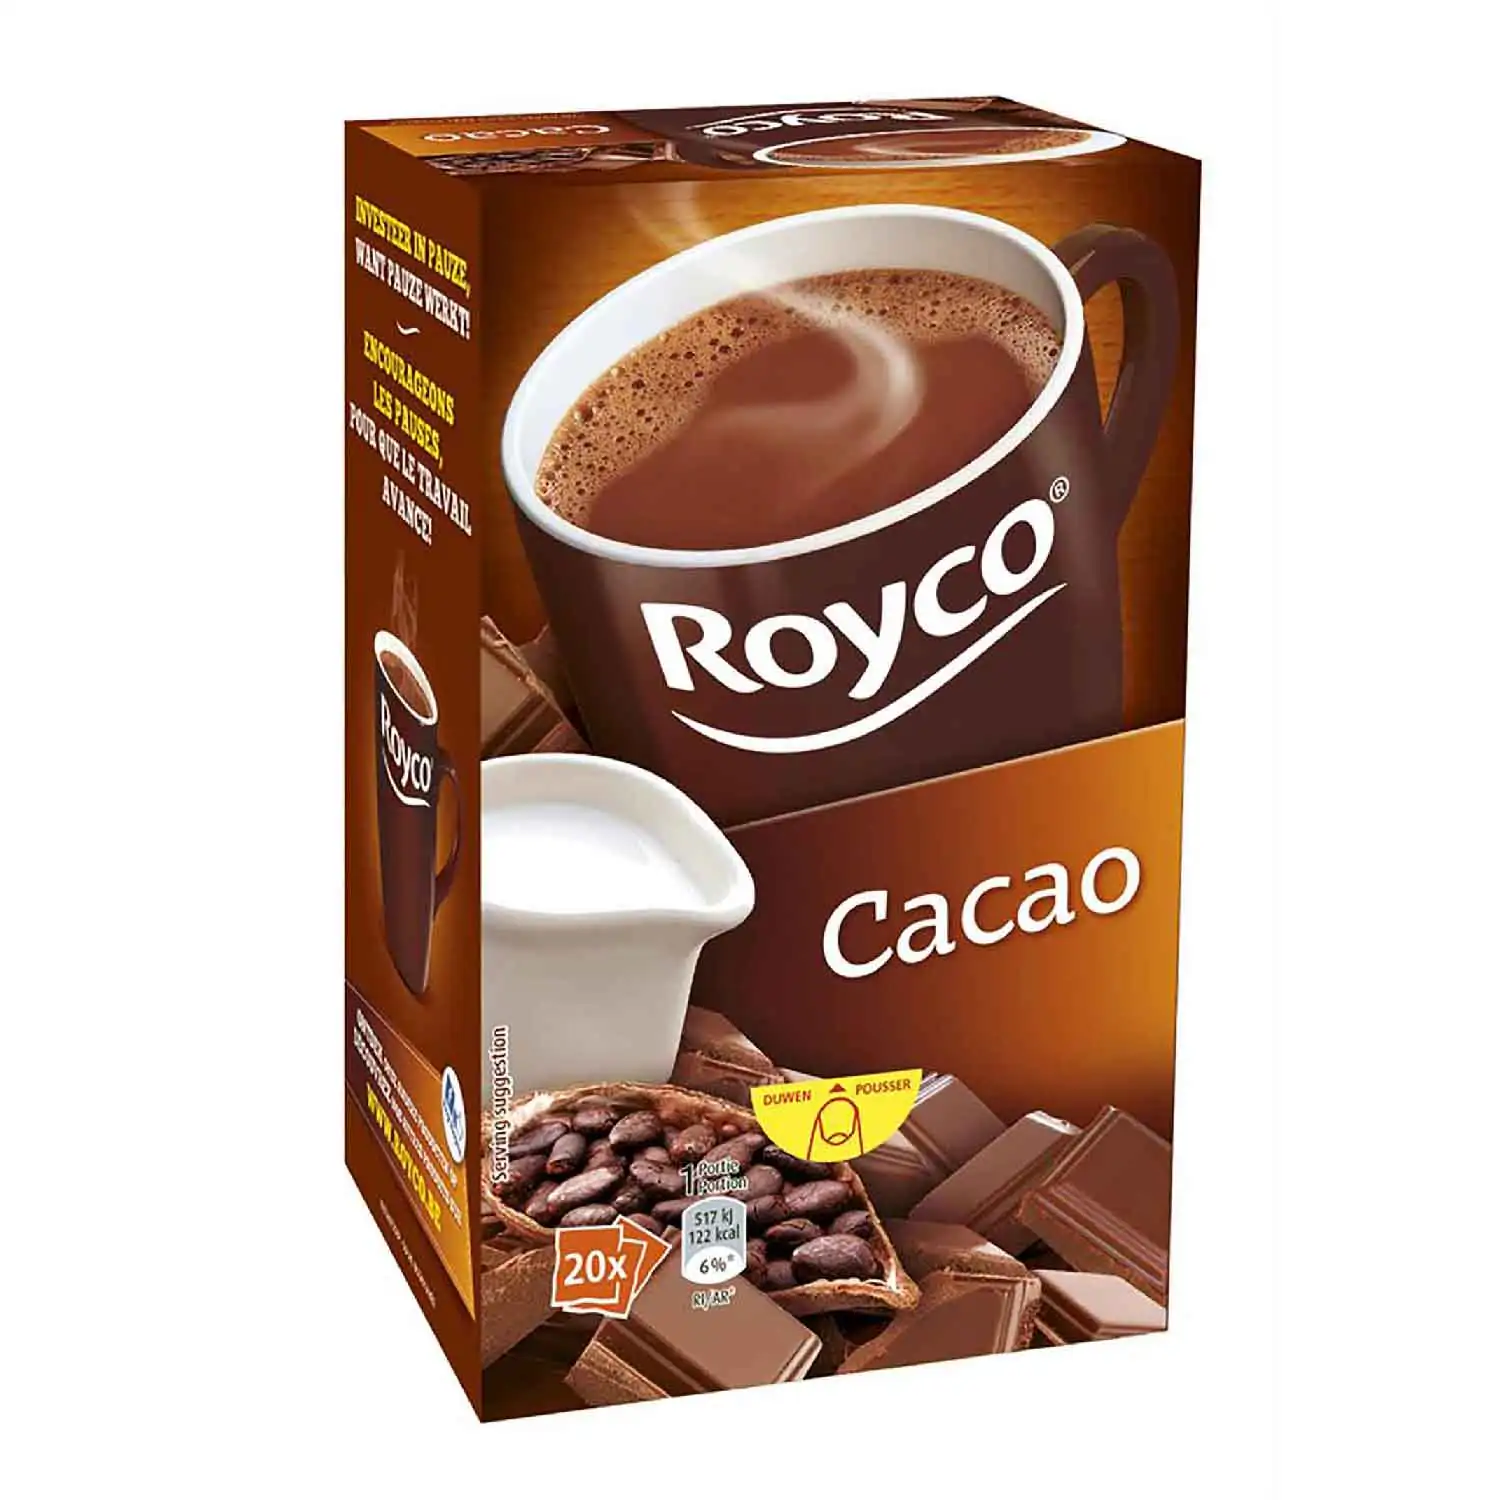 20x Royco cacao 31g - Buy at Real Tobacco